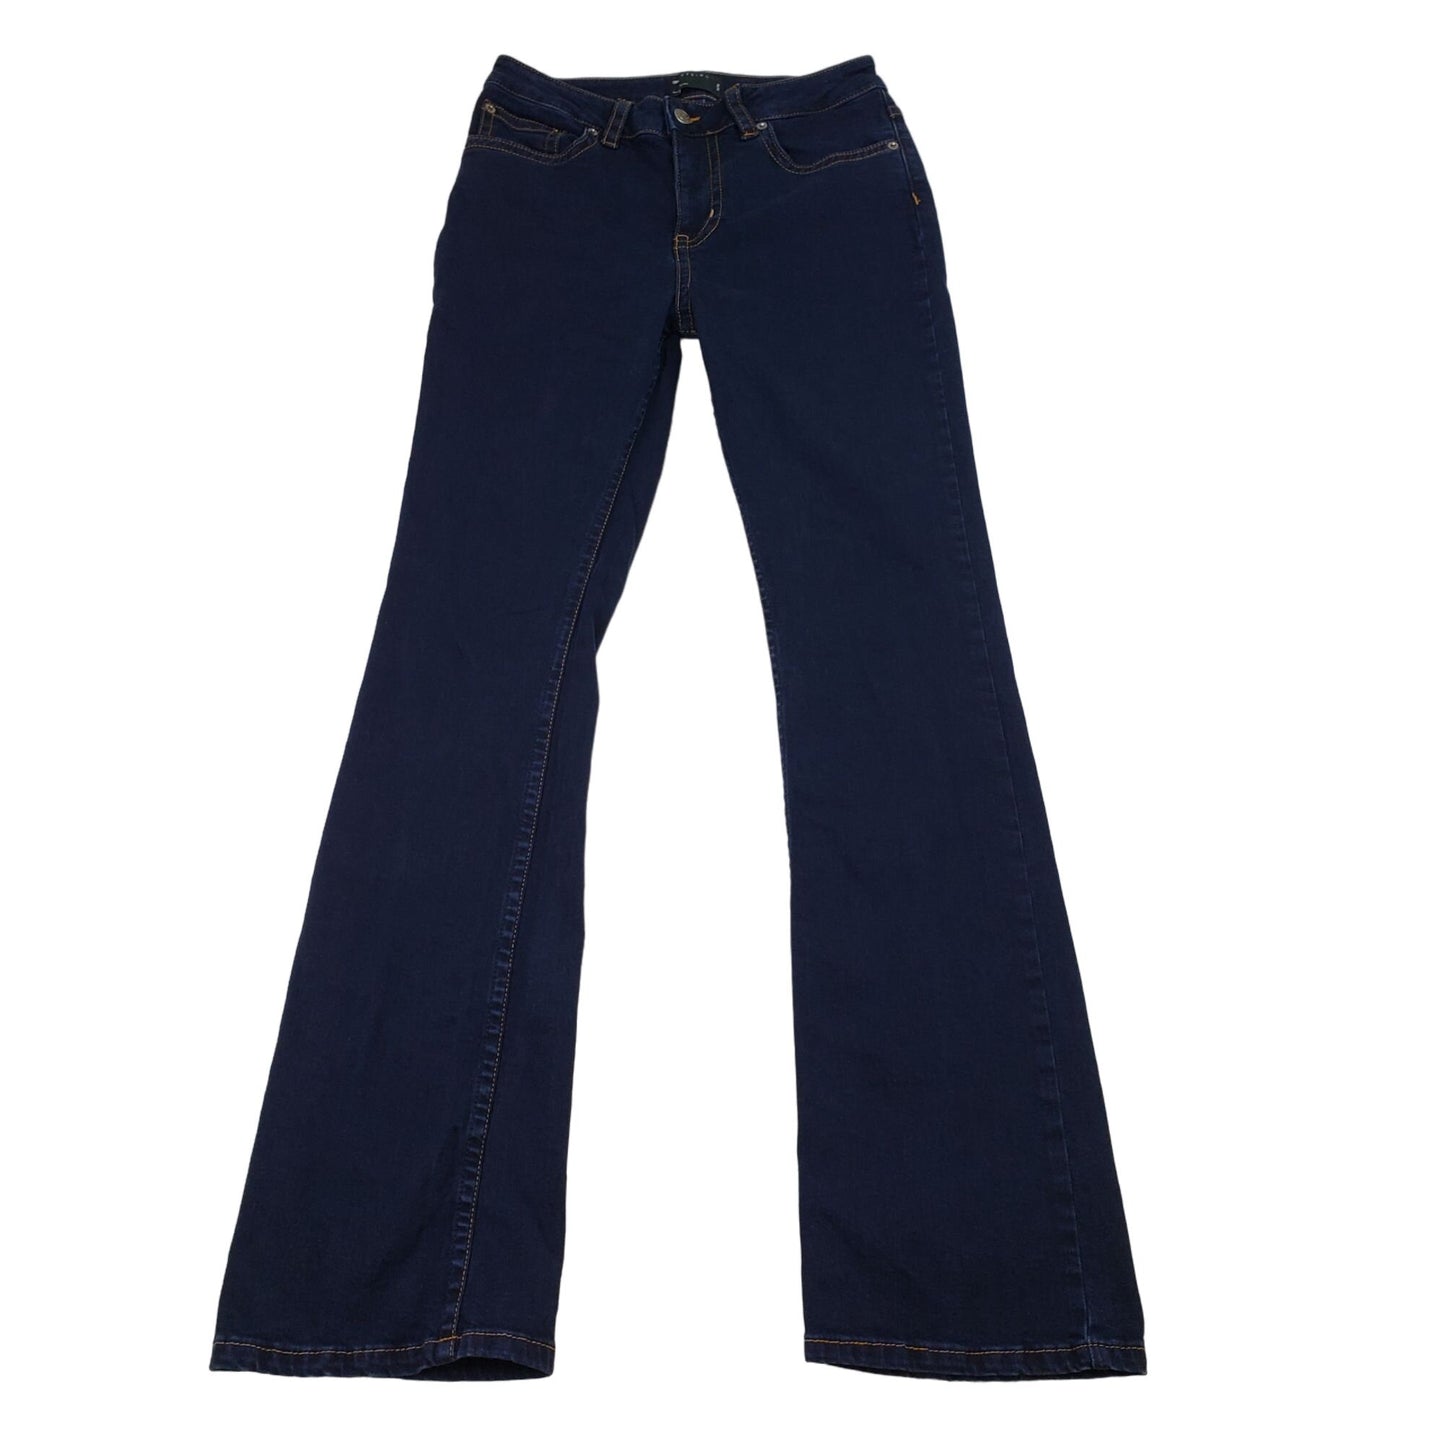 ASOS Dark Wash Flare Jeans Size 26